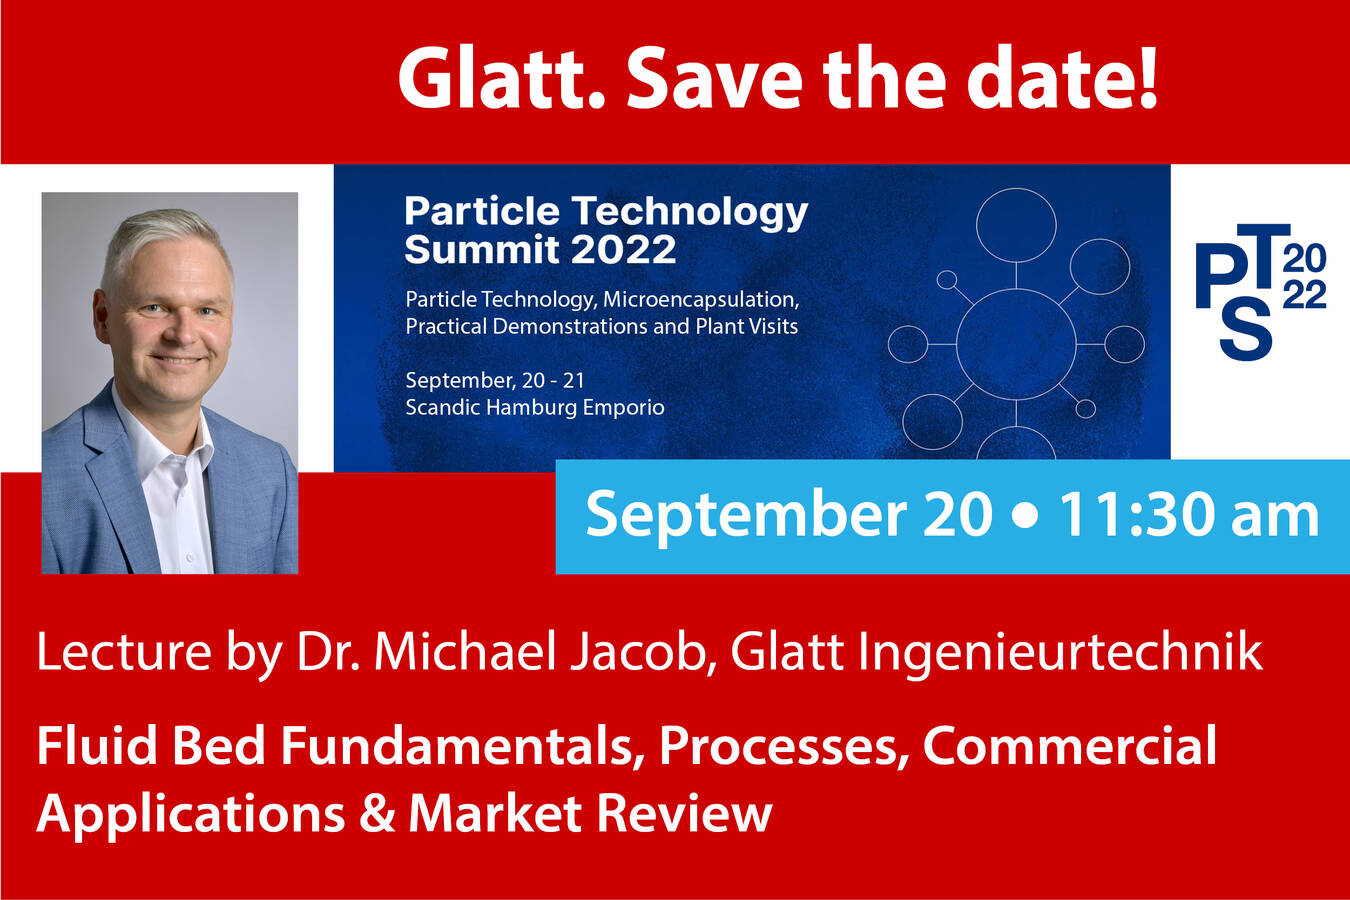 Treffen Sie Dr. Michael Jacob auf dem Parcticle Technology Summit 2022